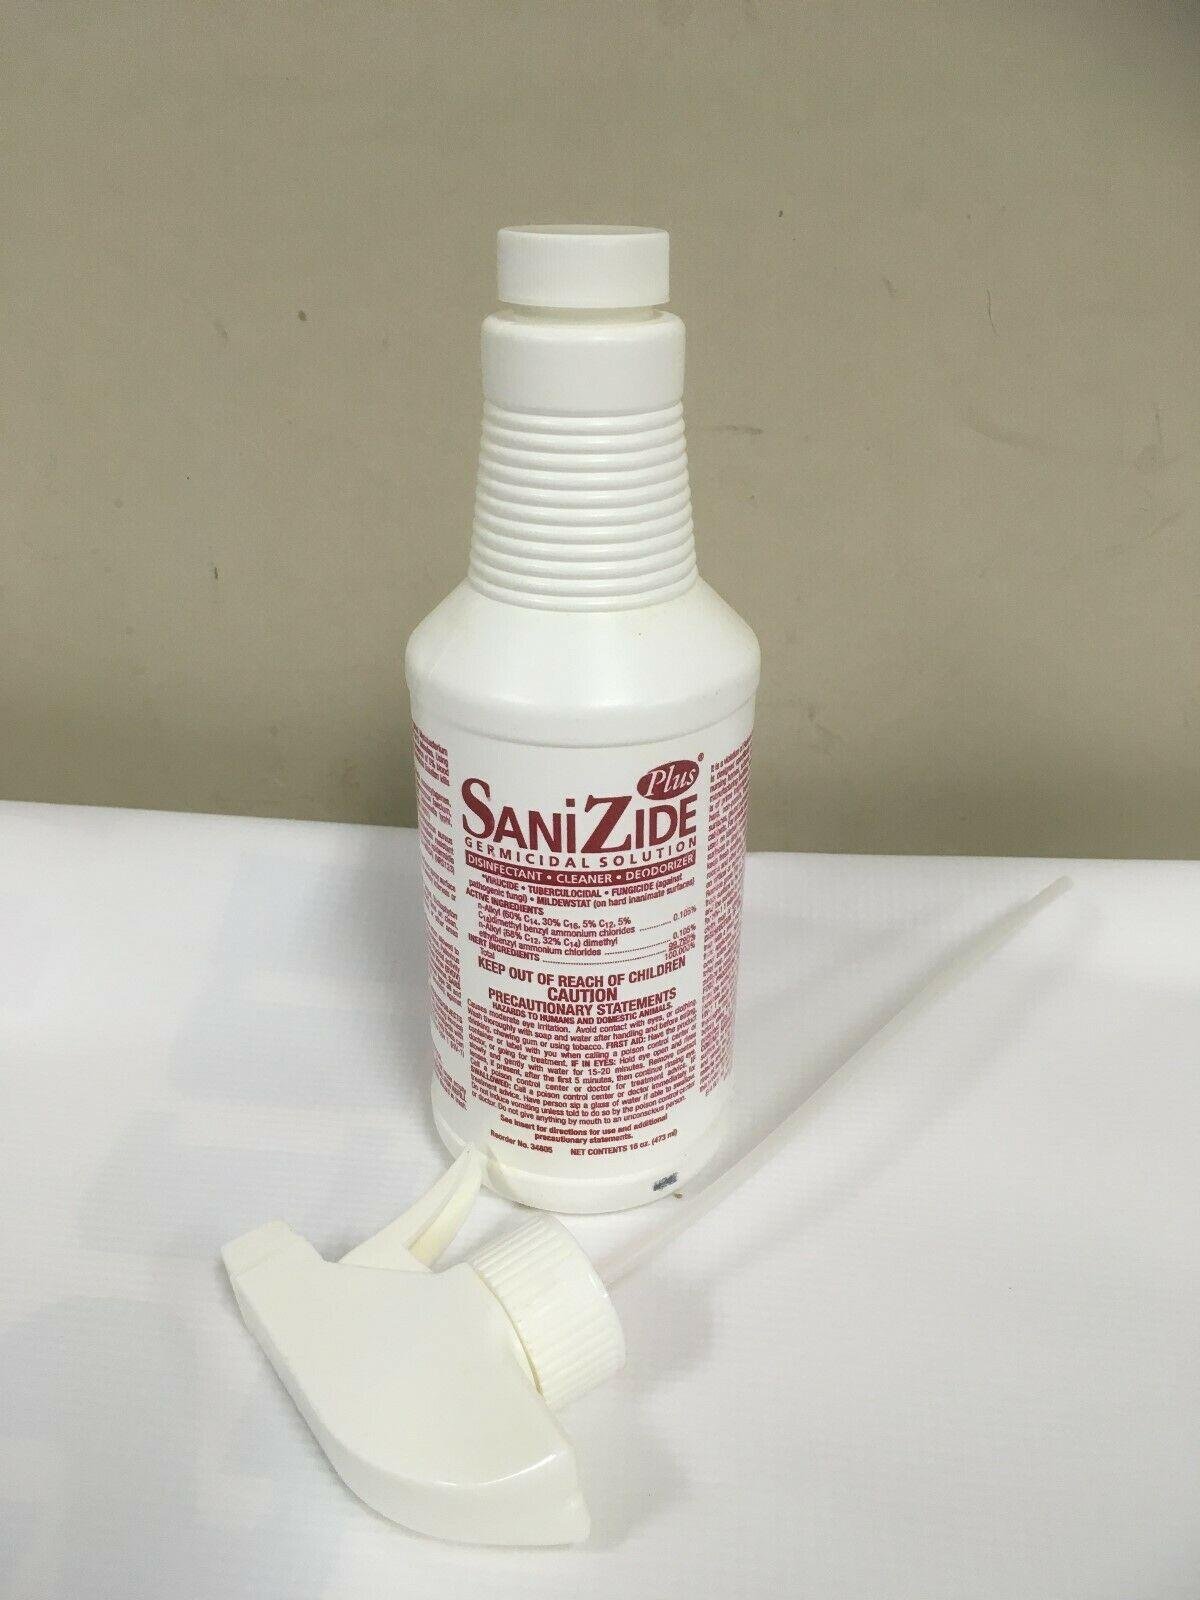 16 OZ SaniZide Plus Disinfectant Solution Spray PROFESSIONAL GRADE Sanitizer